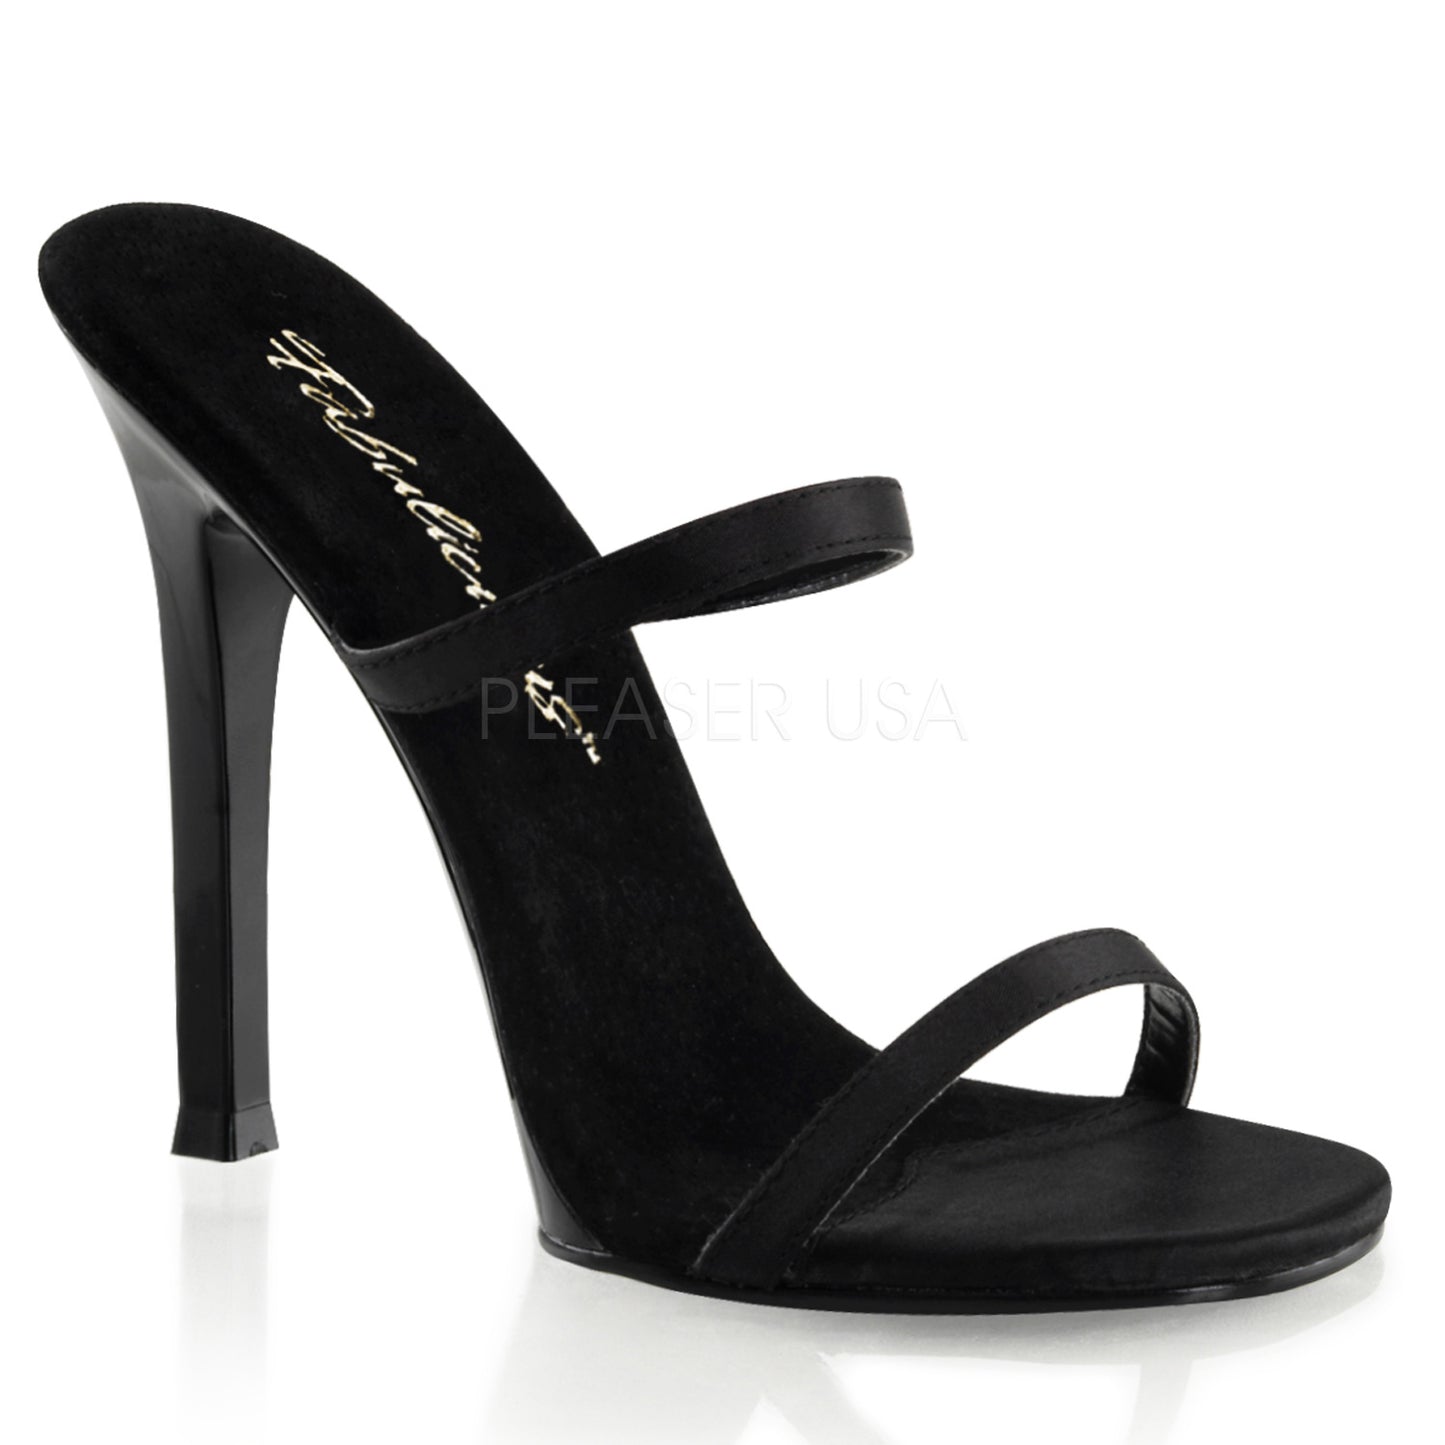 GALA-02 Fabulicious 4.5 Inch Heel Black Satin Sexy Shoes